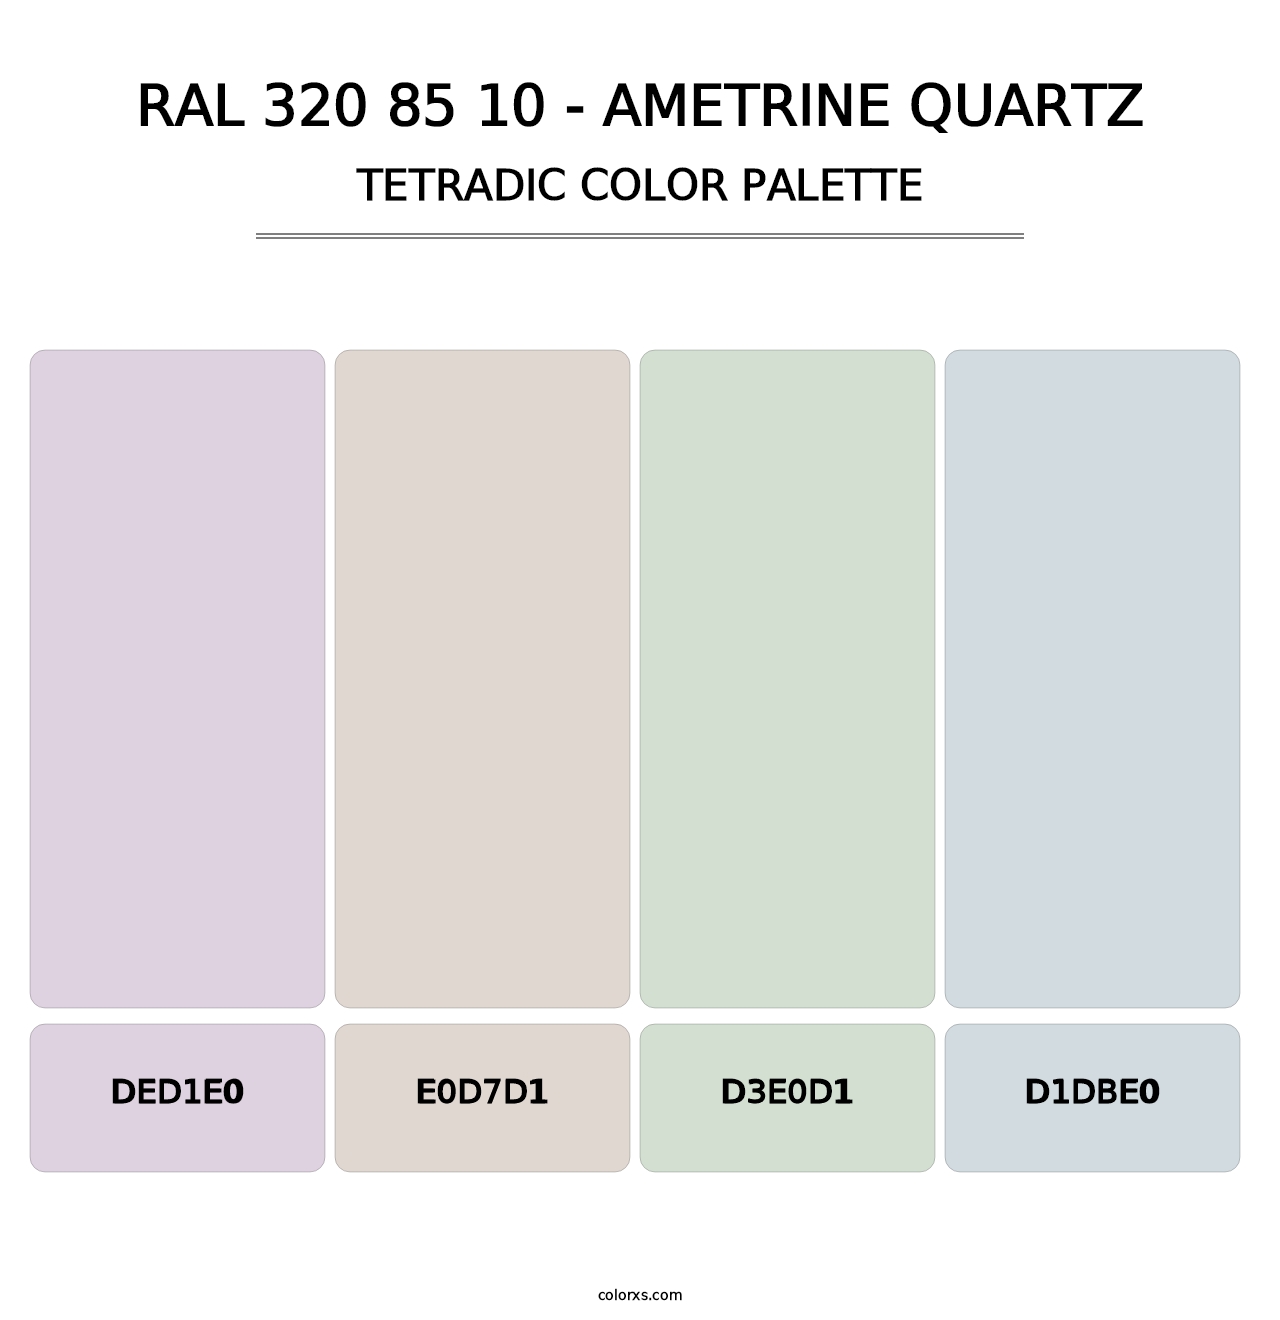 RAL 320 85 10 - Ametrine Quartz - Tetradic Color Palette